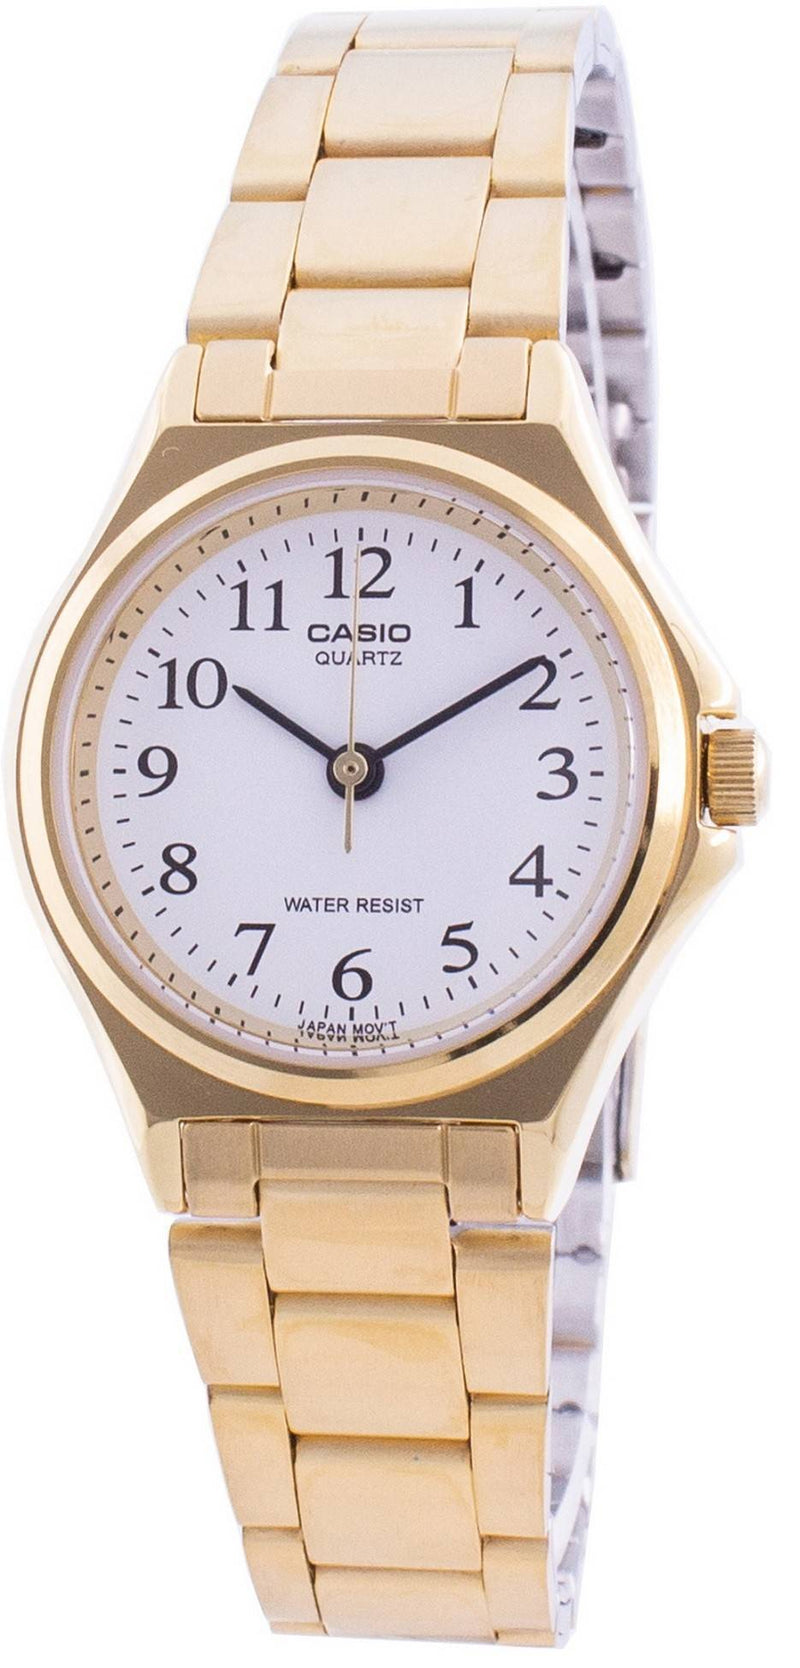 Casio LTP-1130N-7B Quartz Women's Watch